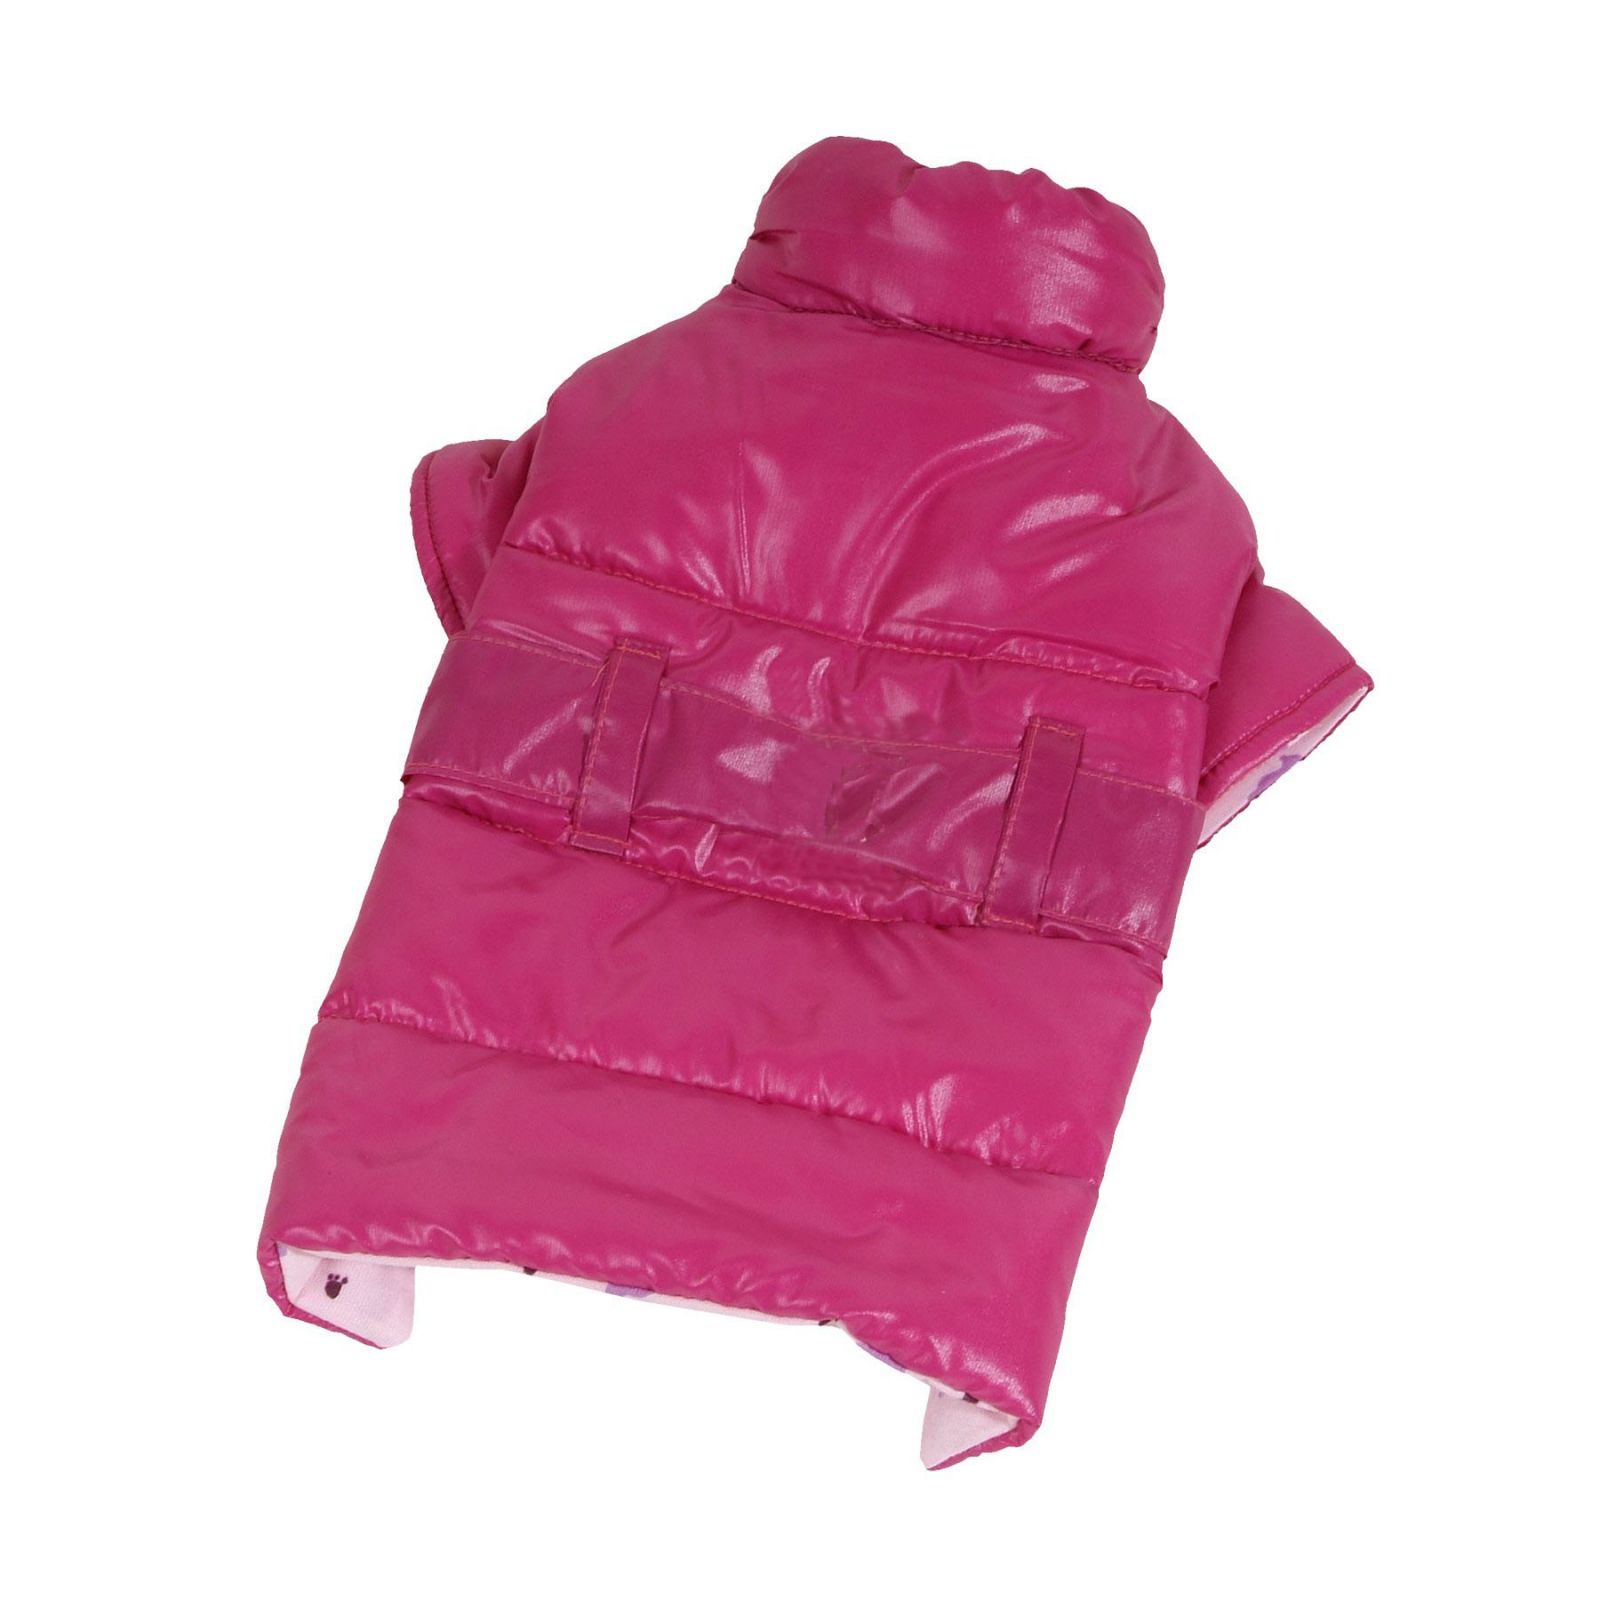 Kabátek De Luxe - růžová (doprodej skladových zásob) XL I love pets